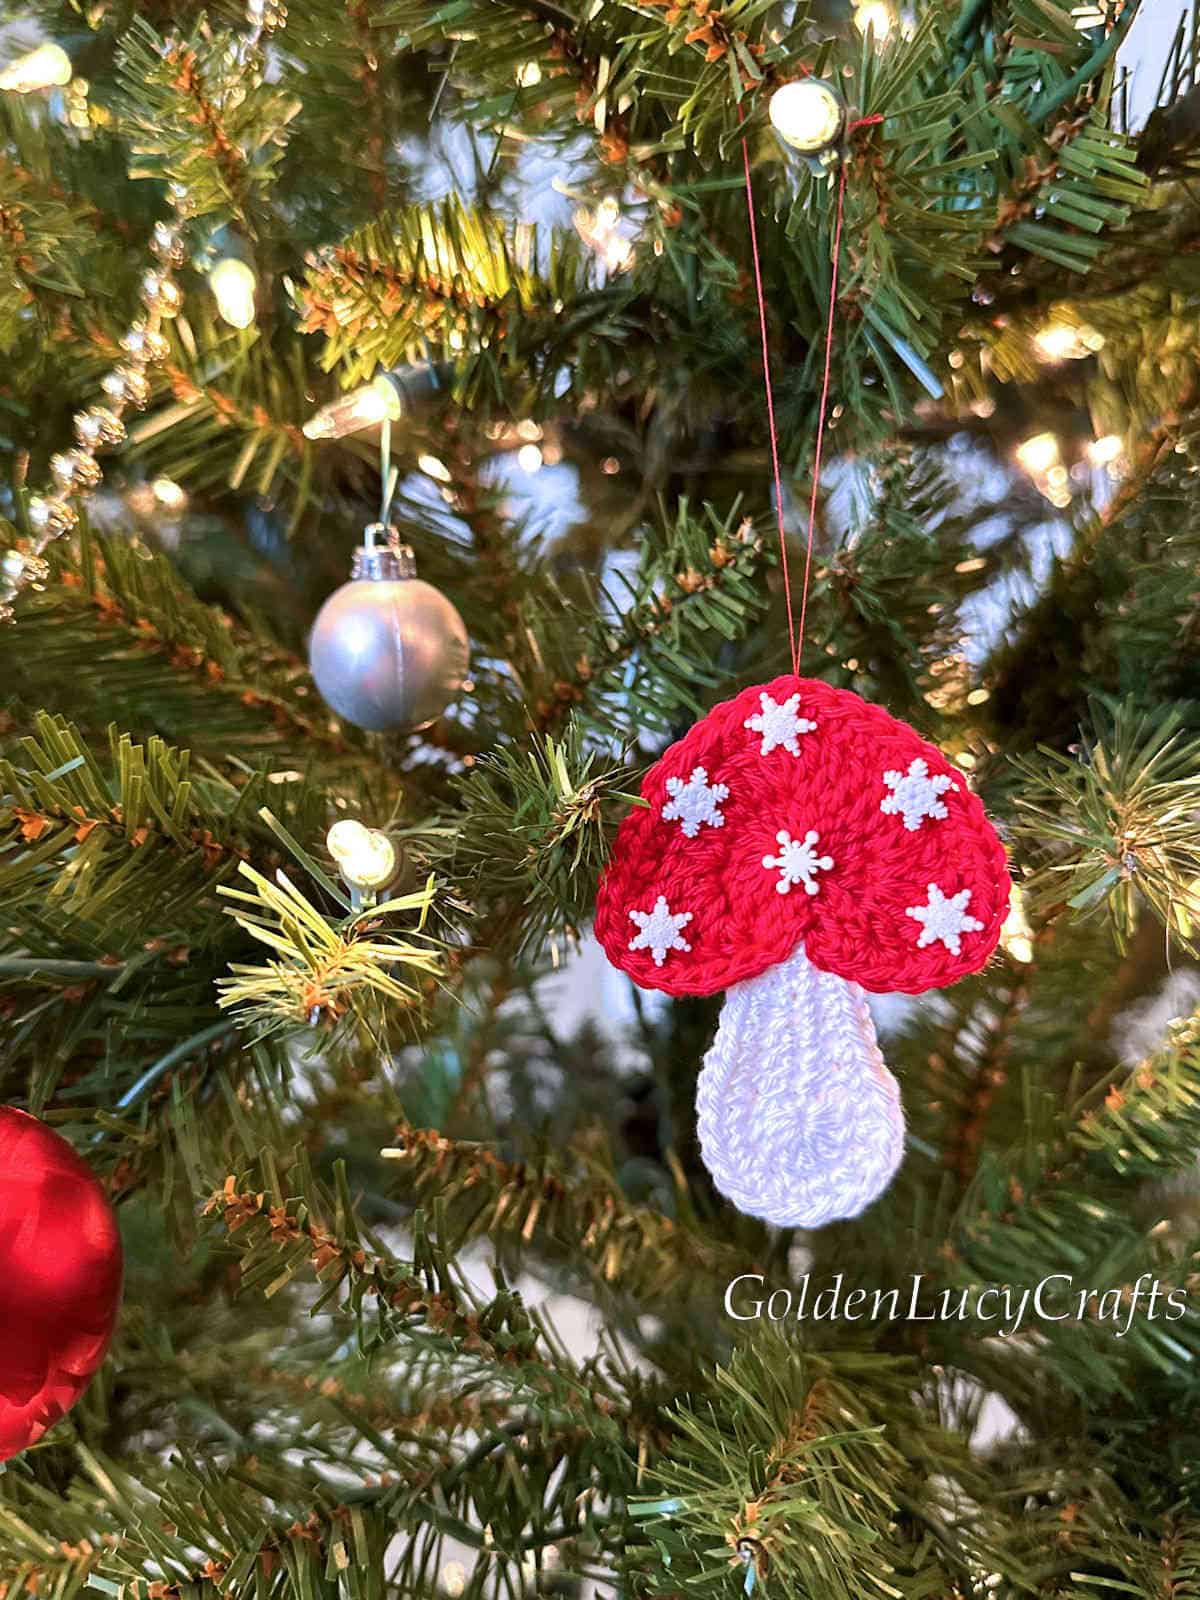 Crochet mushroom ornament on the Christmas tree.